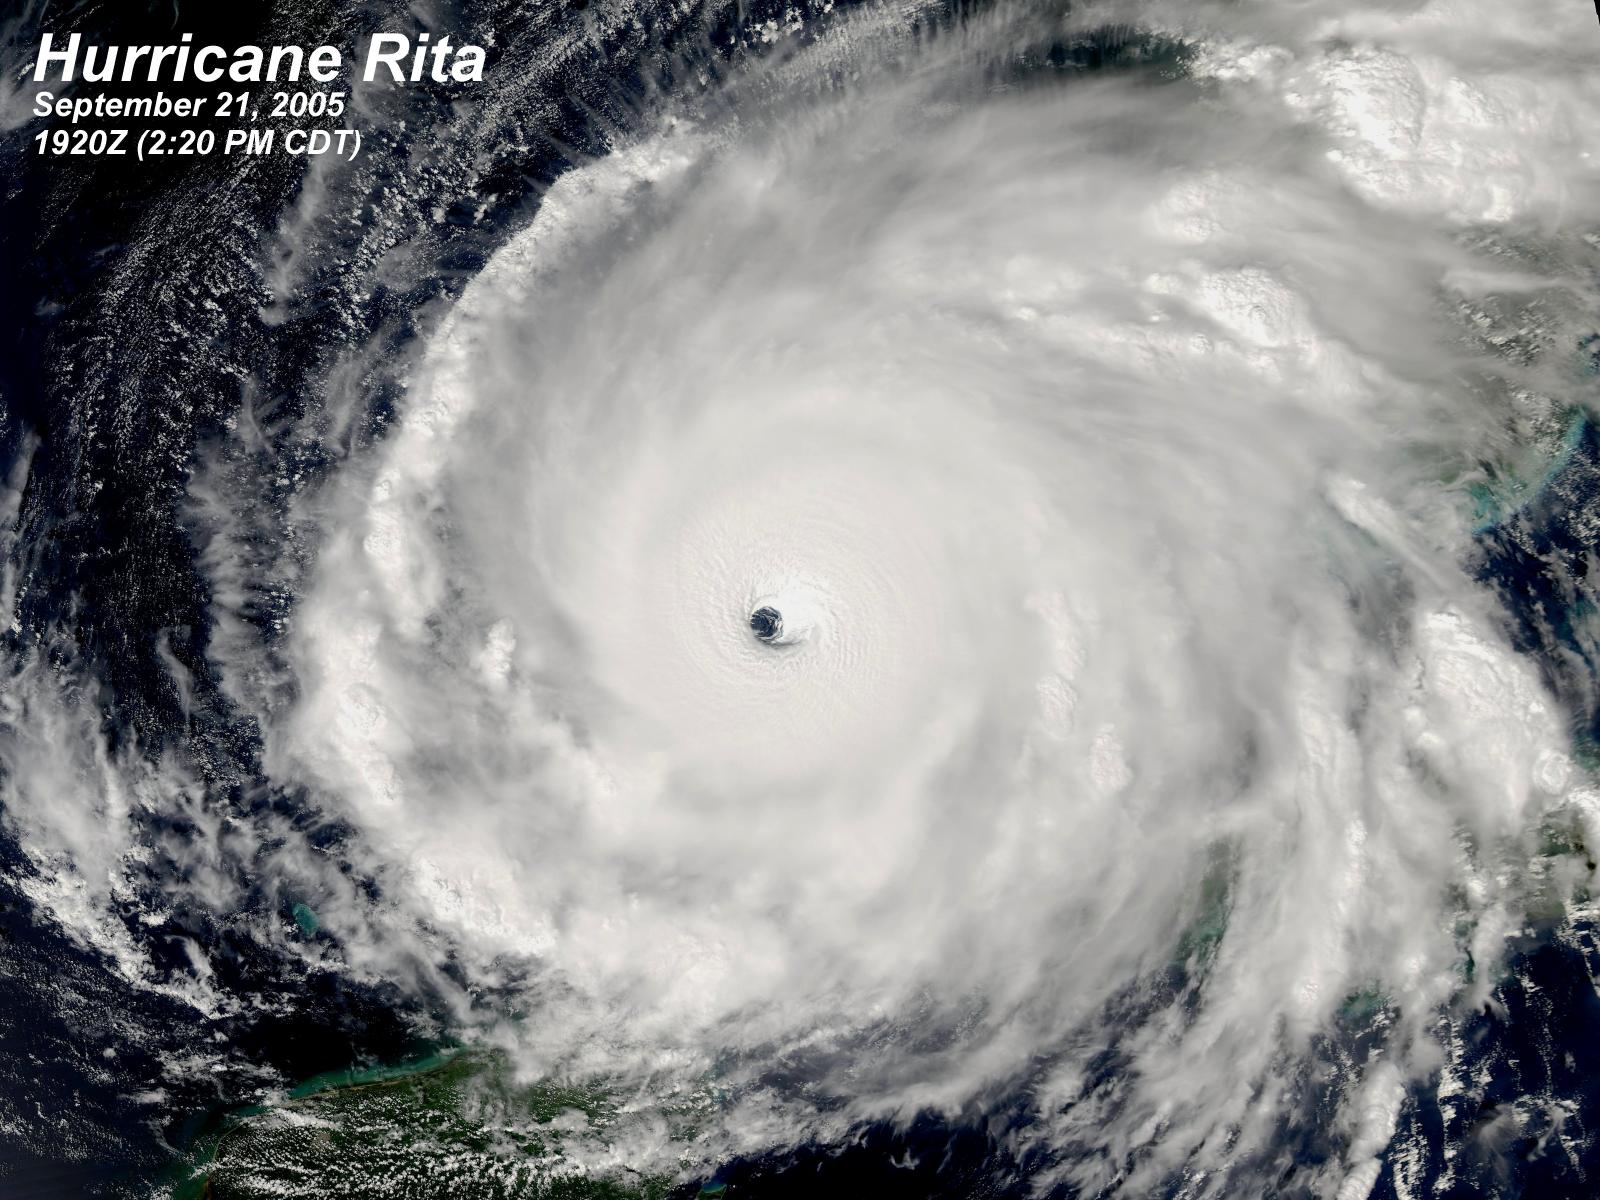 MODIS Visible Satellite Image of Hurricane Rita during the rapid intensifying trend at 2:20 PM CDT September 21, 2005.